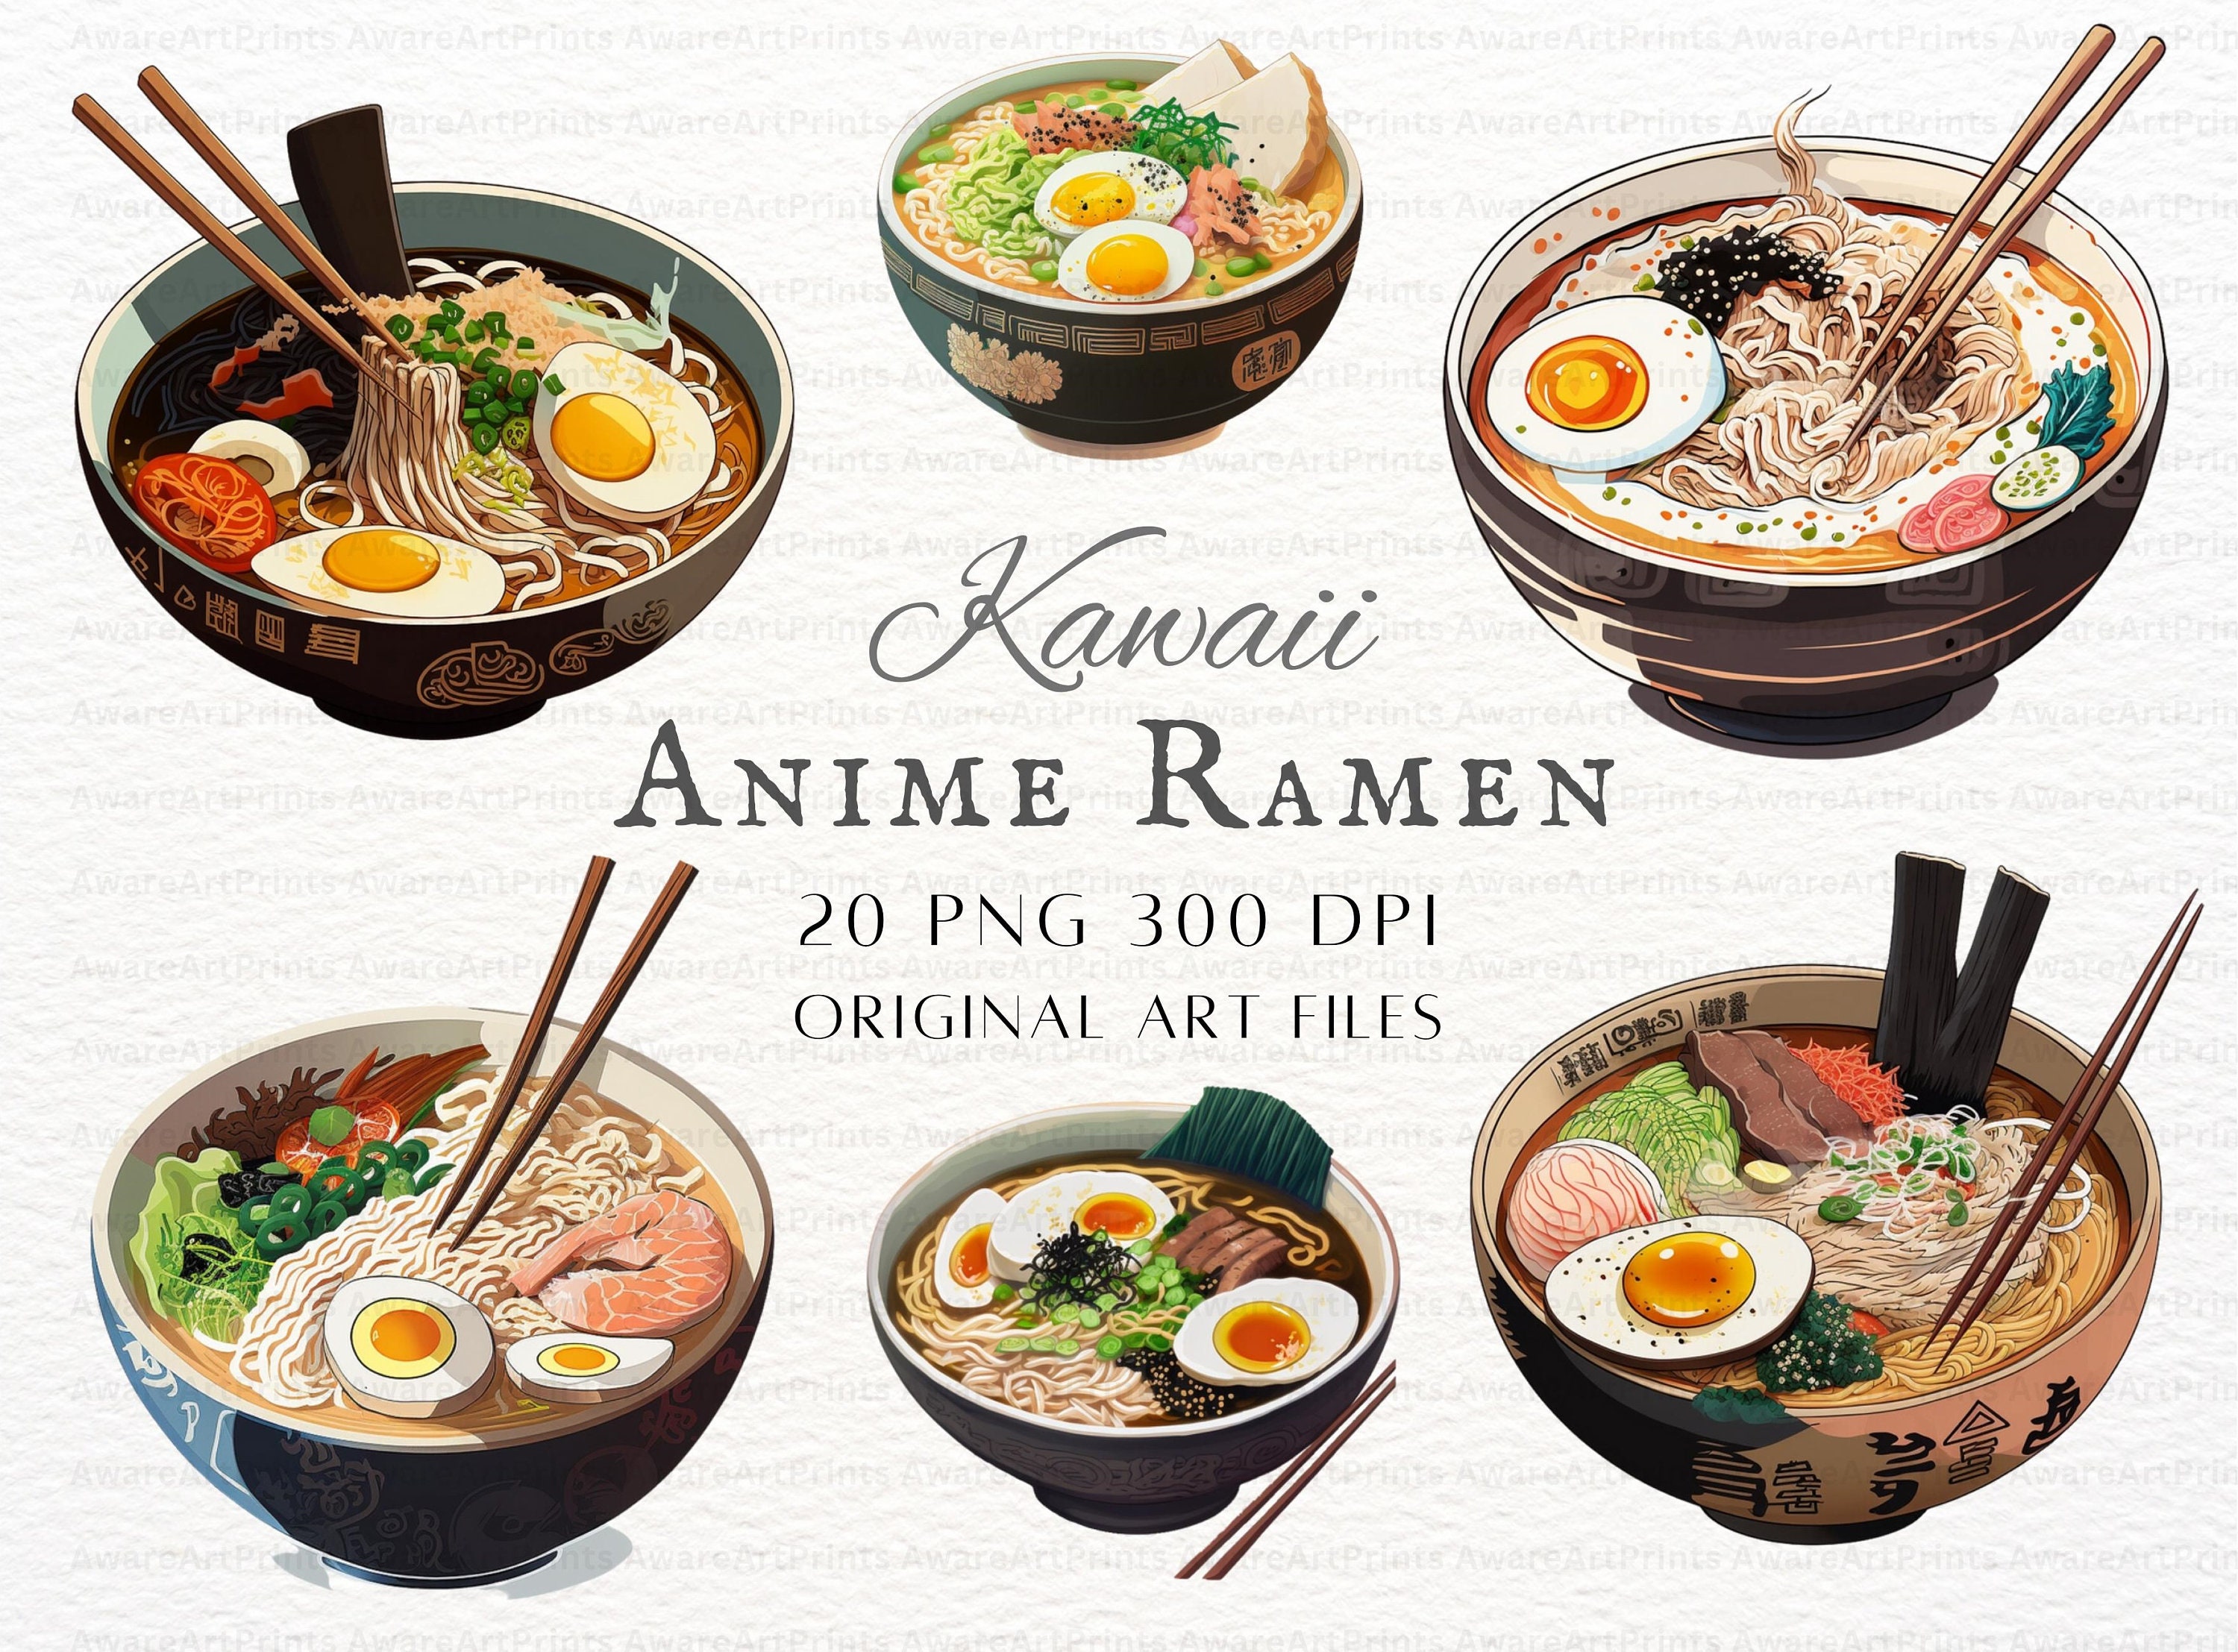 LVMMO Anime Ramen Bowl Set for Noodles, Straw Hat Ramen Bowl for Udon Noodle Soba Salad Anime Fan Item Gift Ceramic